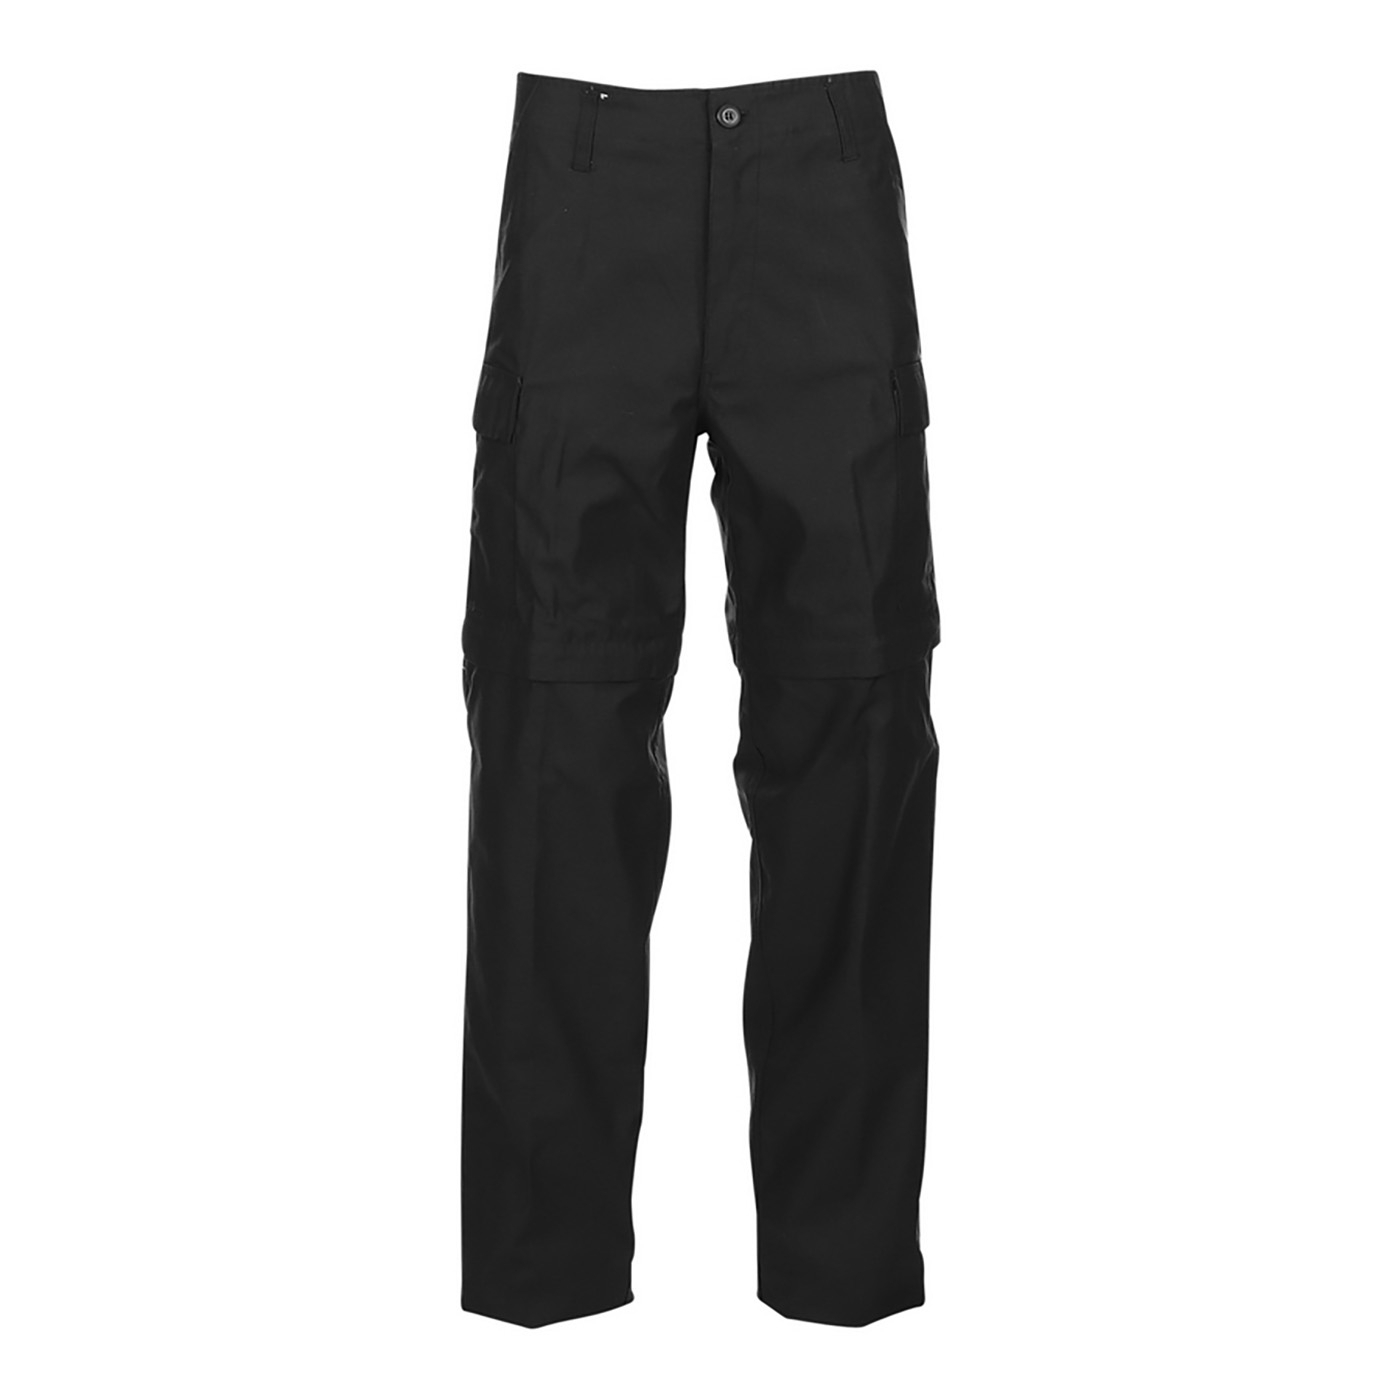 Black Army Pants - Zip Off Legs (ARMYZIPBL) Pants - Rigeshop